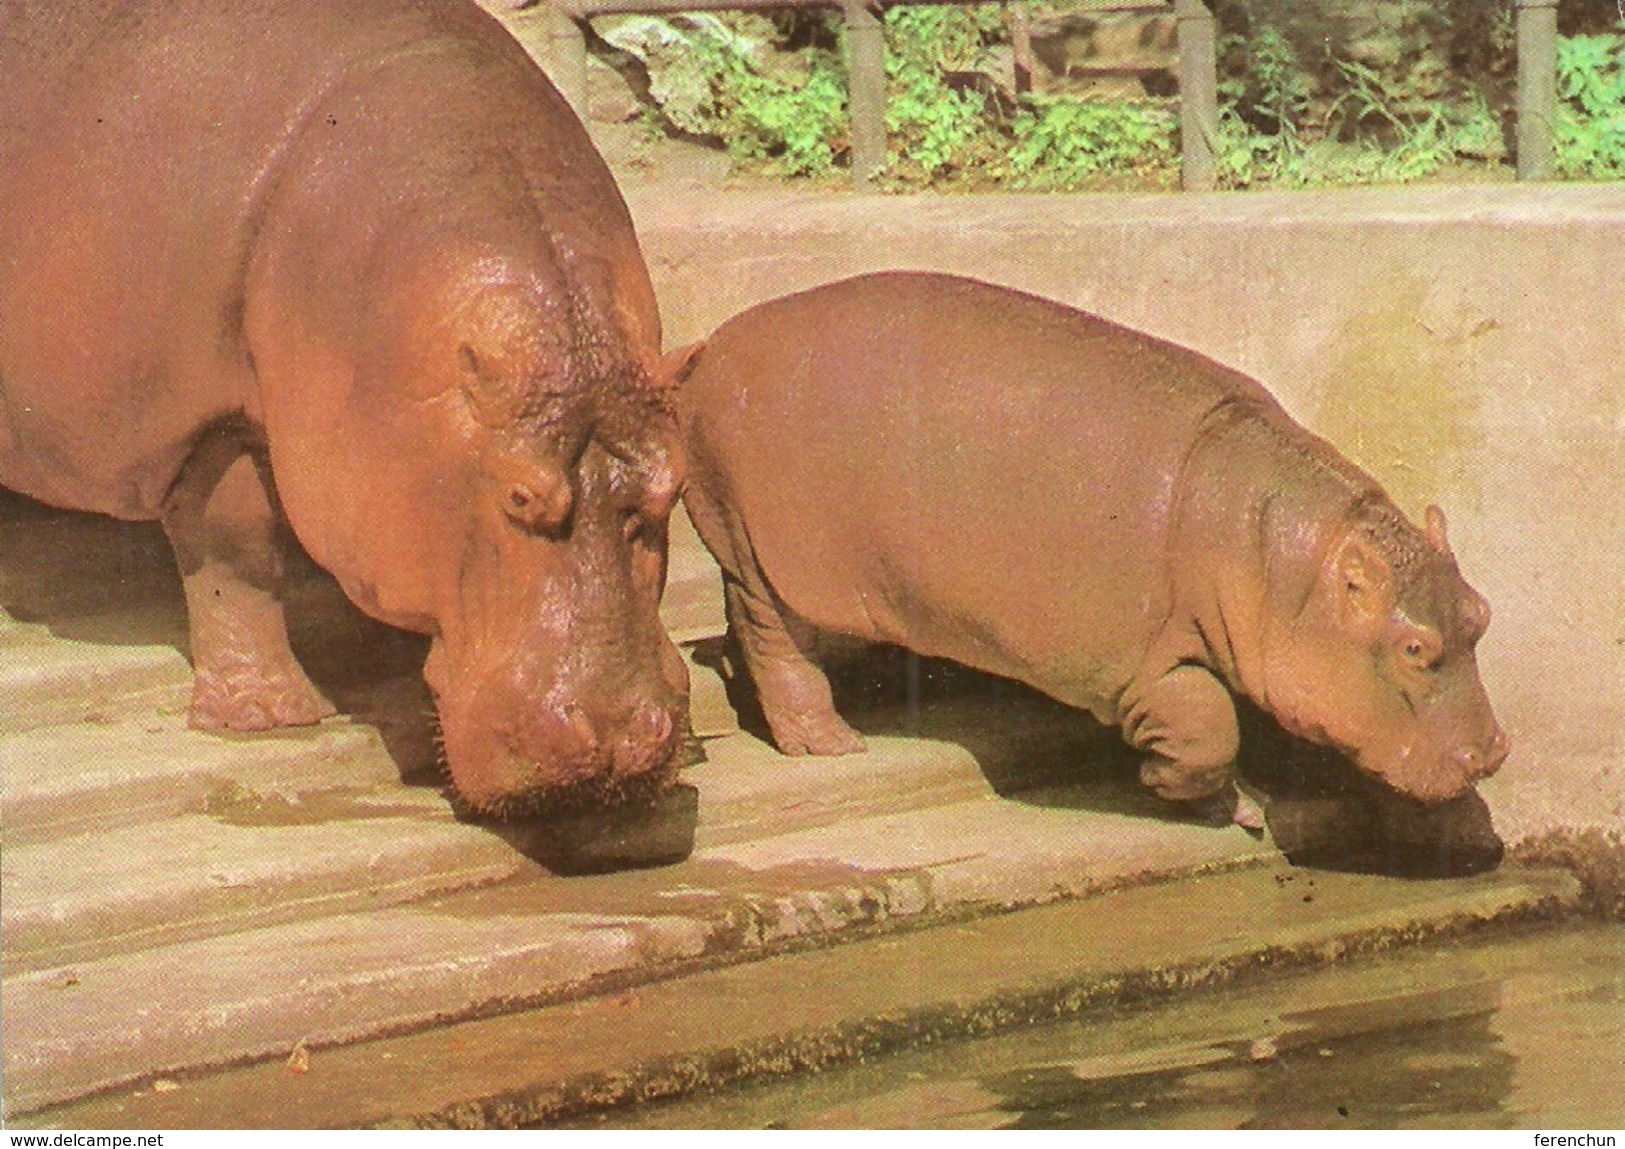 HIPPOPOTAMUS * BABY HIPPO * ANIMAL * ZOO & BOTANICAL GARDEN * BUDAPEST * KAK 0028 722 * Hungary - Hippopotamuses